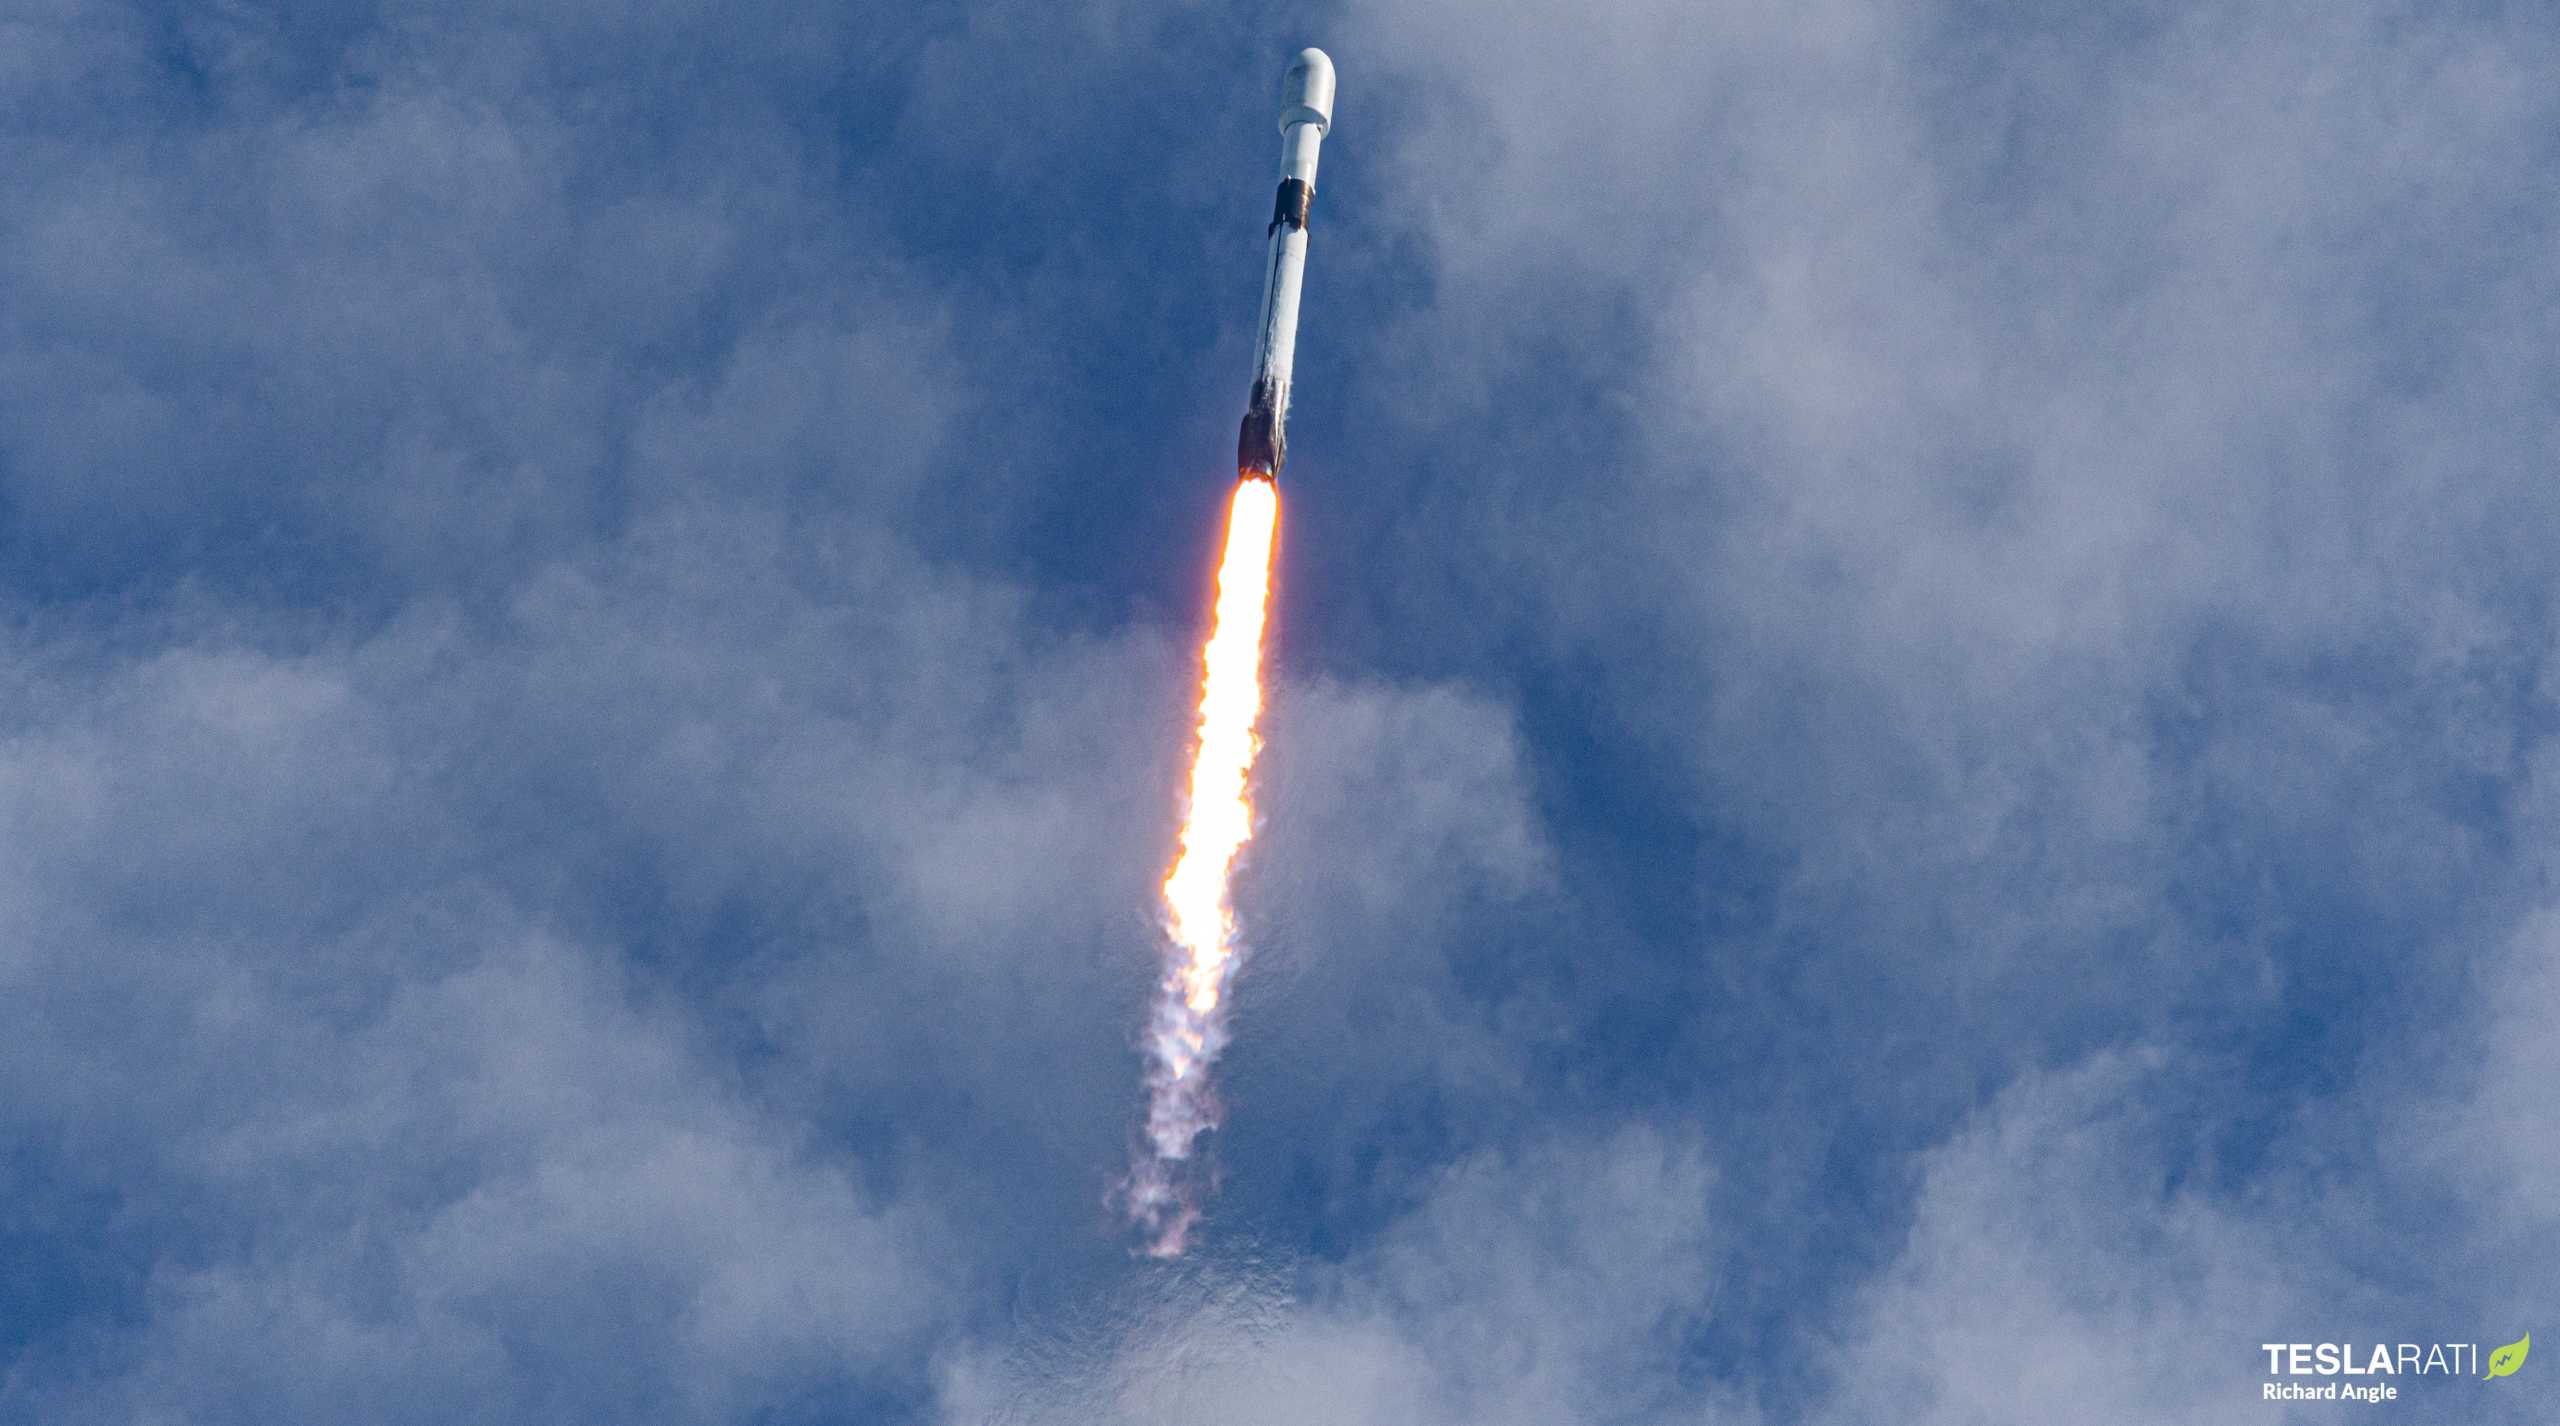 Starlink-10 SkySat Falcon 9 B1049 081820 (Richard Angle) launch 9 (c)